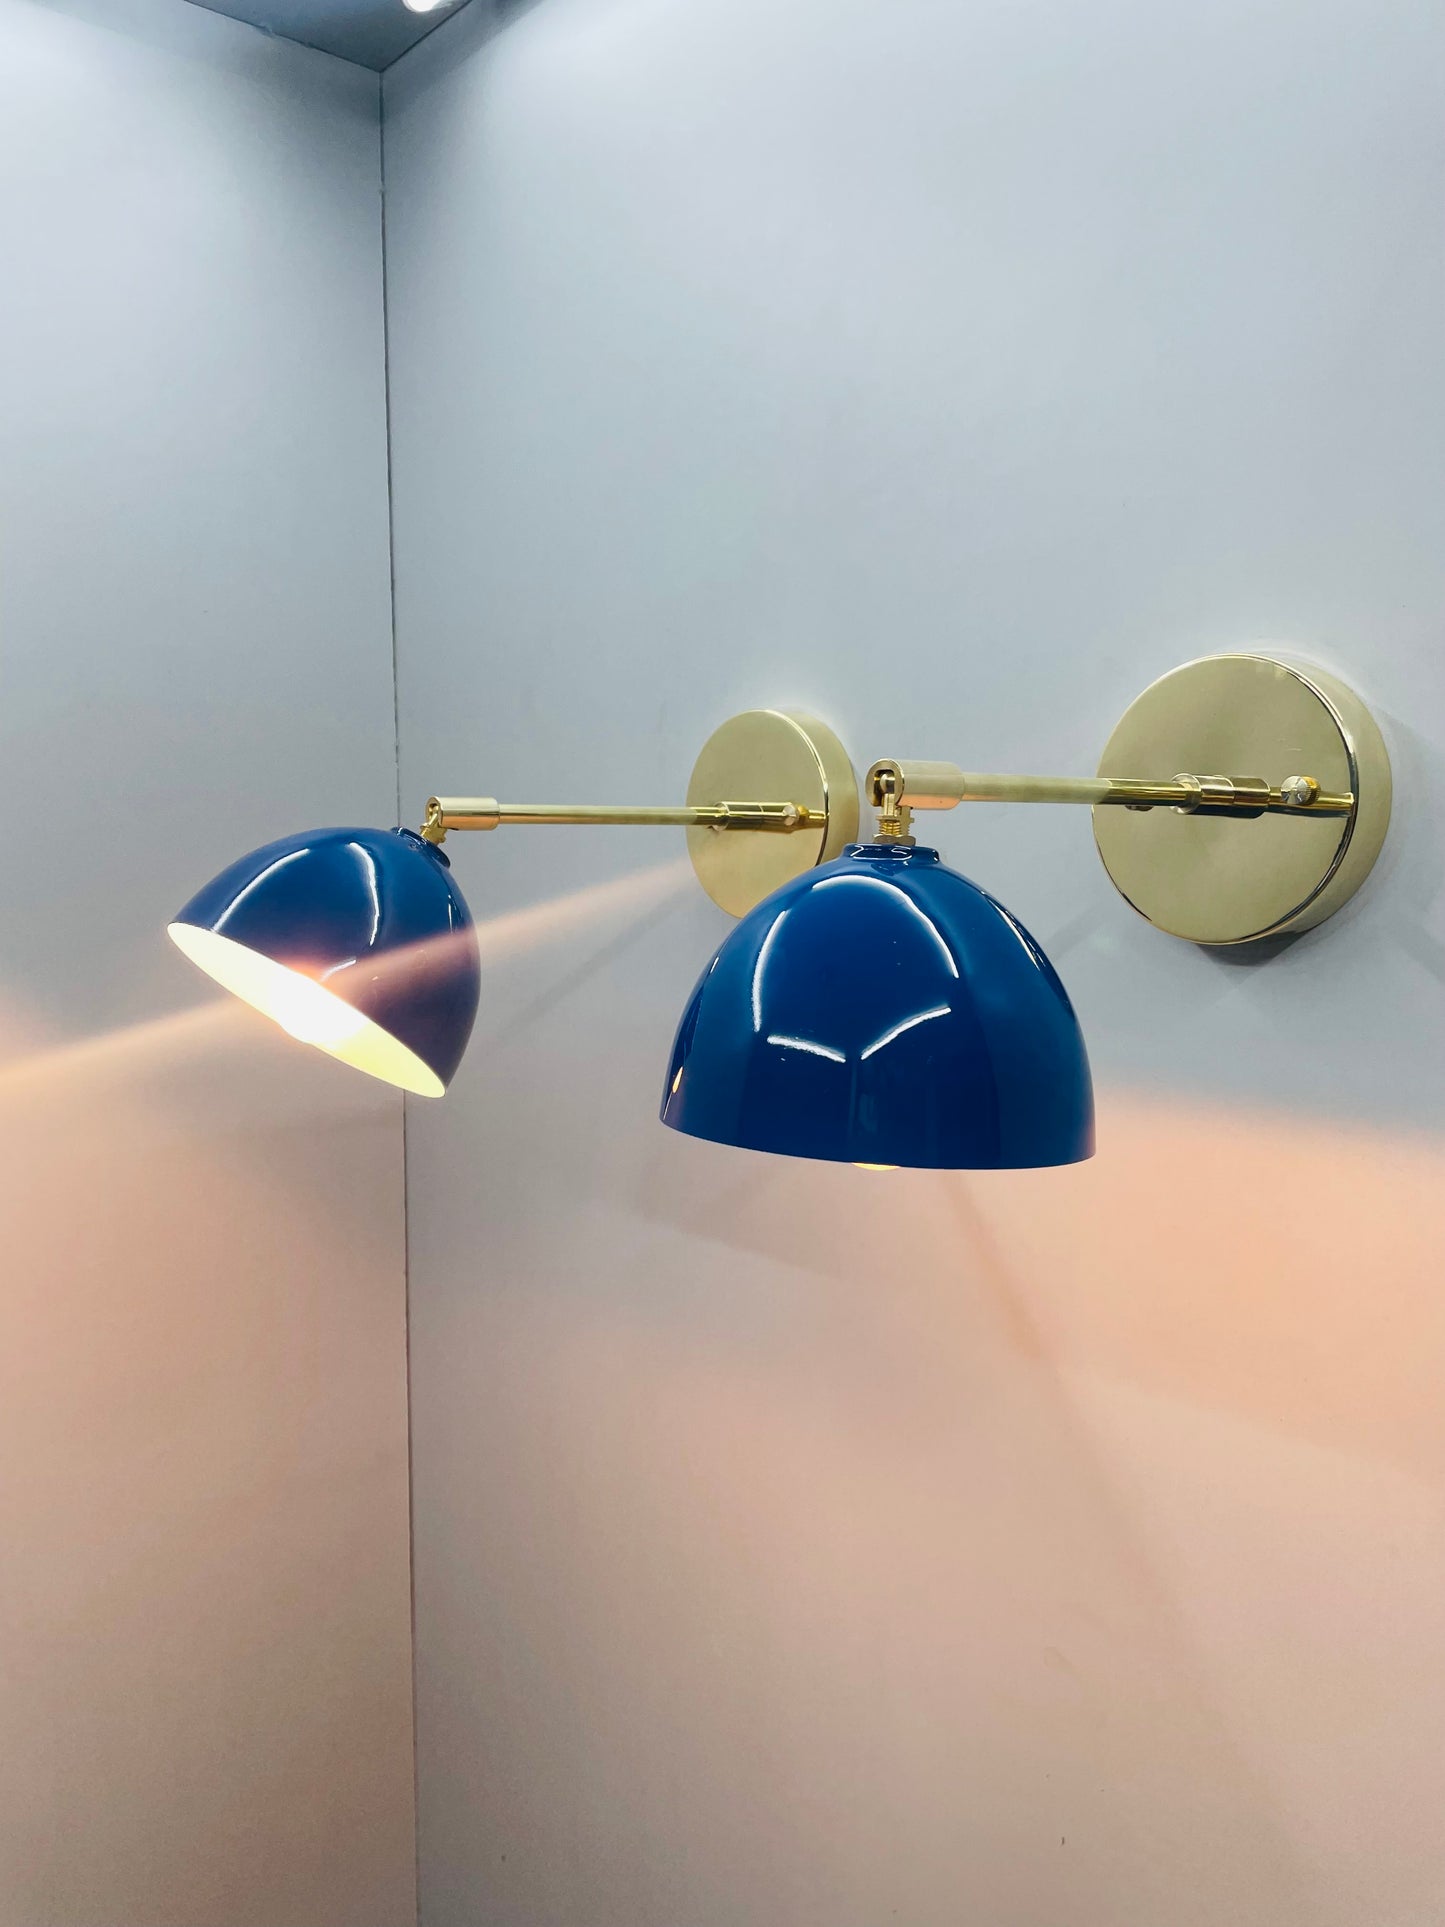 Unique Plug-In Wall Sconce Lamps - Vintage Charm - Modern Bedside Lighting